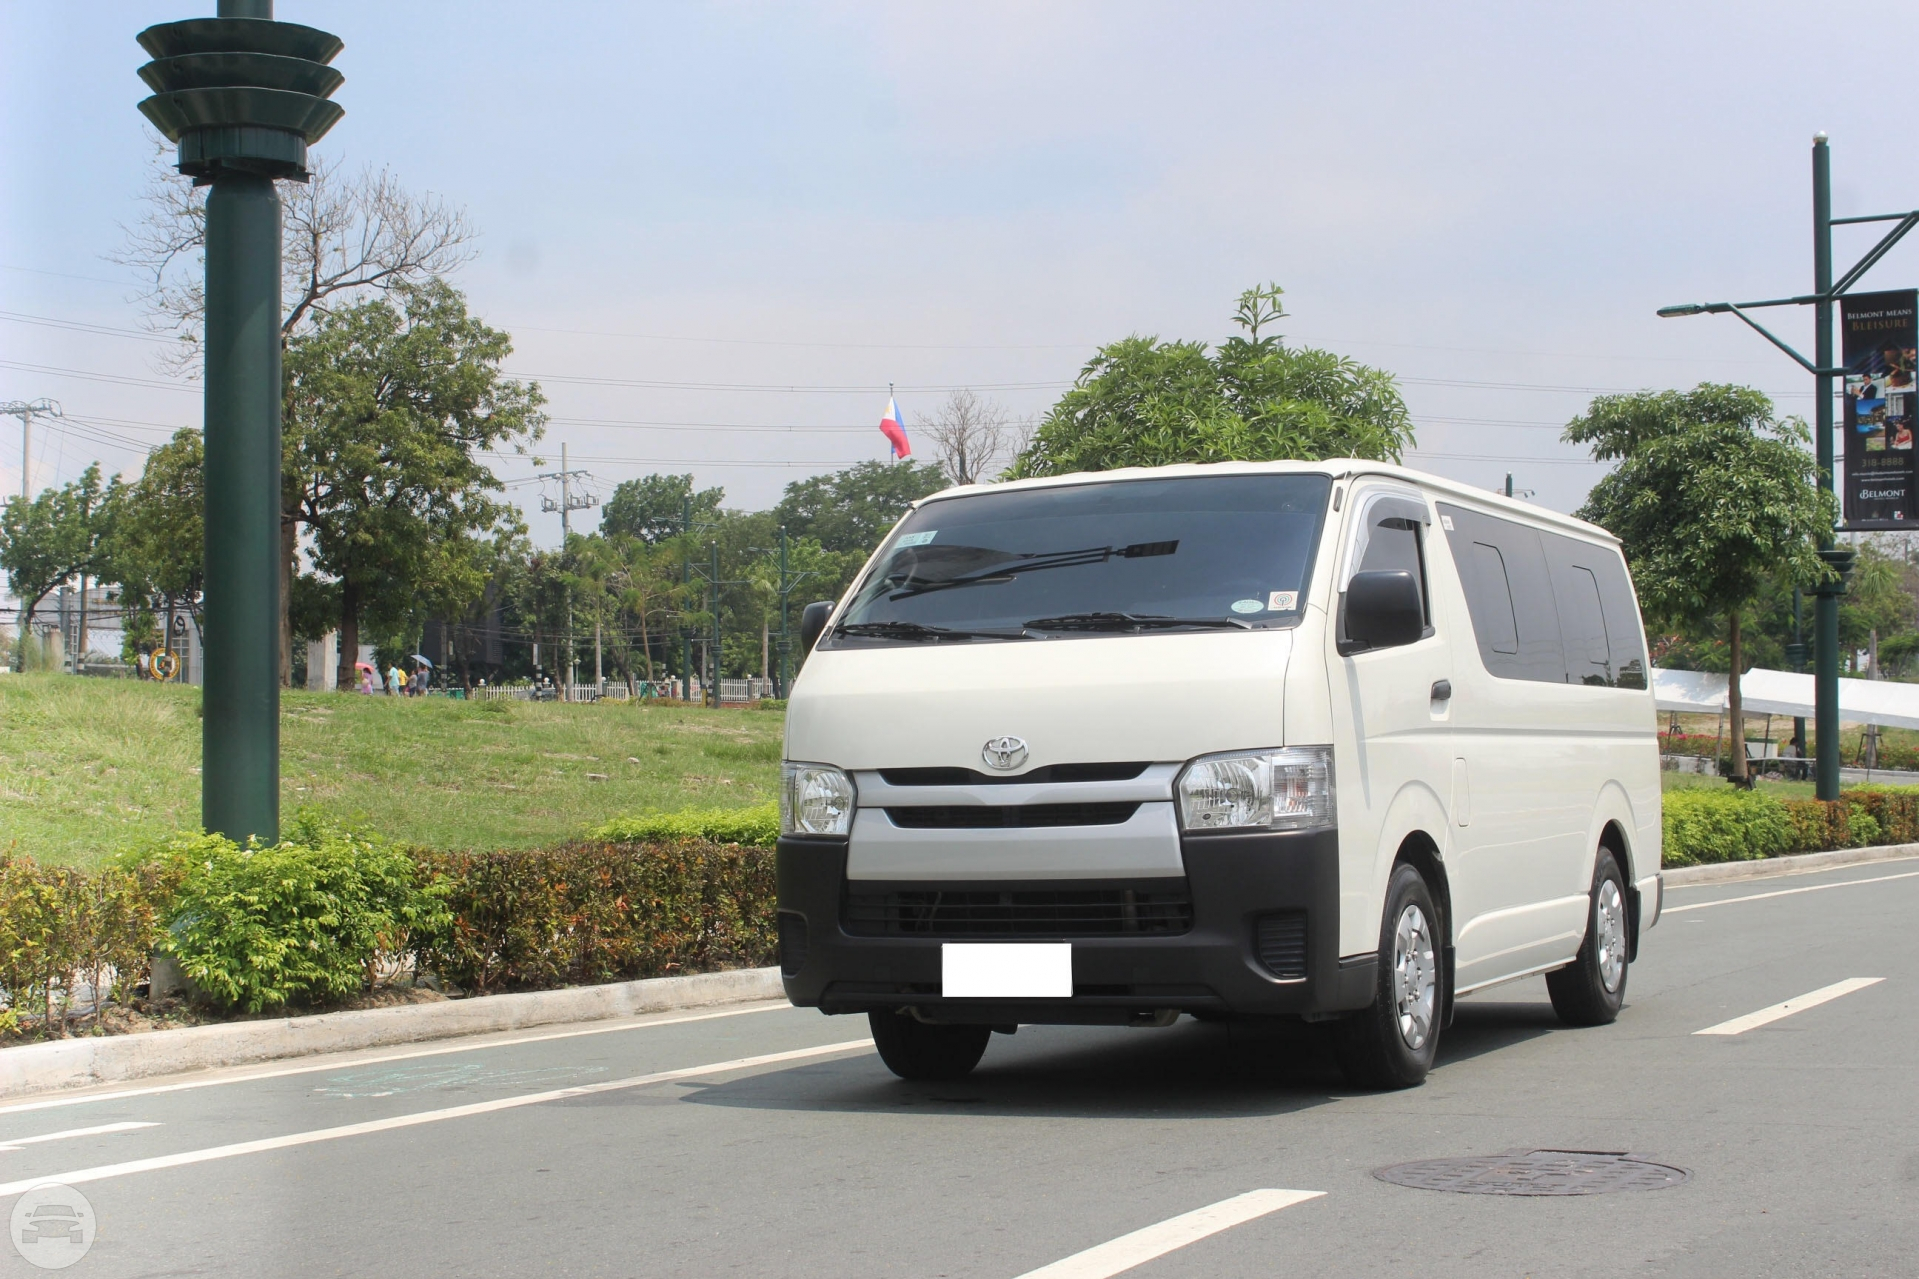 15-18 Seater Toyota Hiace Commuter
Van /
Taguig, Metro Manila

 / Airport Transfer ₱3,000.00
 / Daily ₱3,500.00
